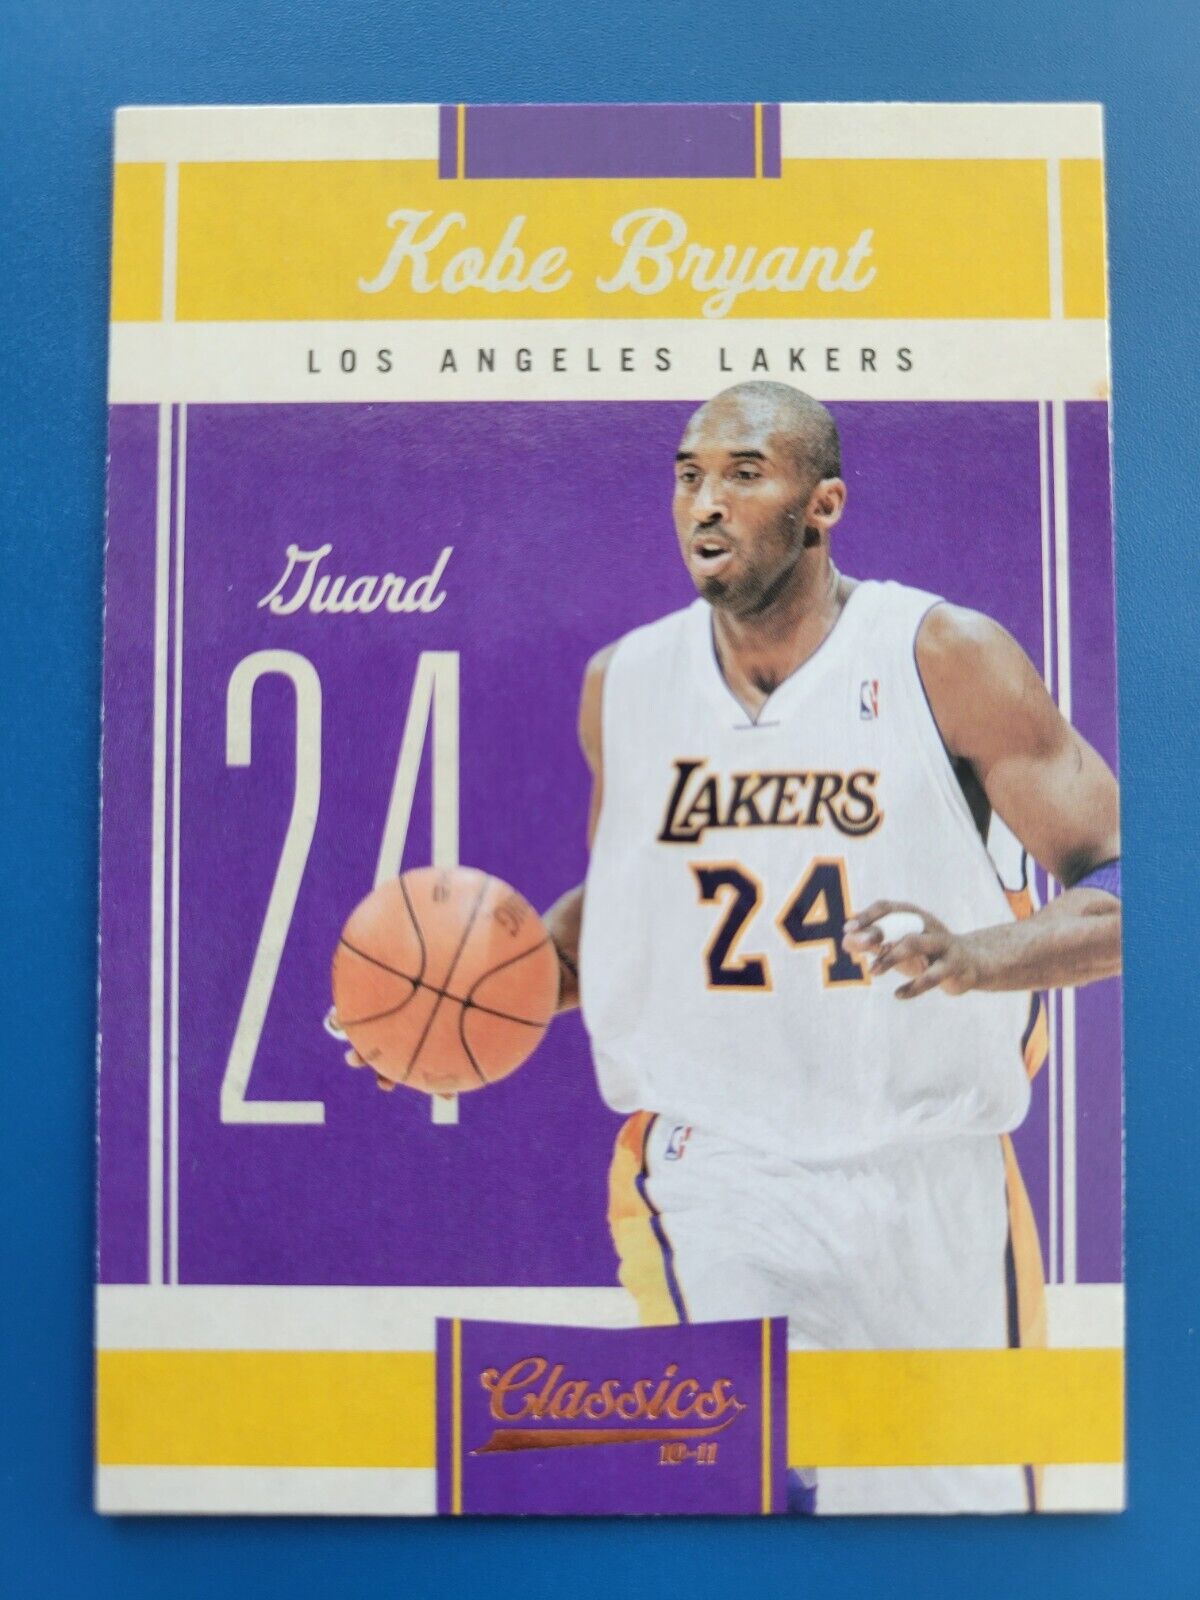 Panini America Kobe Bryant Los Angeles Lakers Autographed White